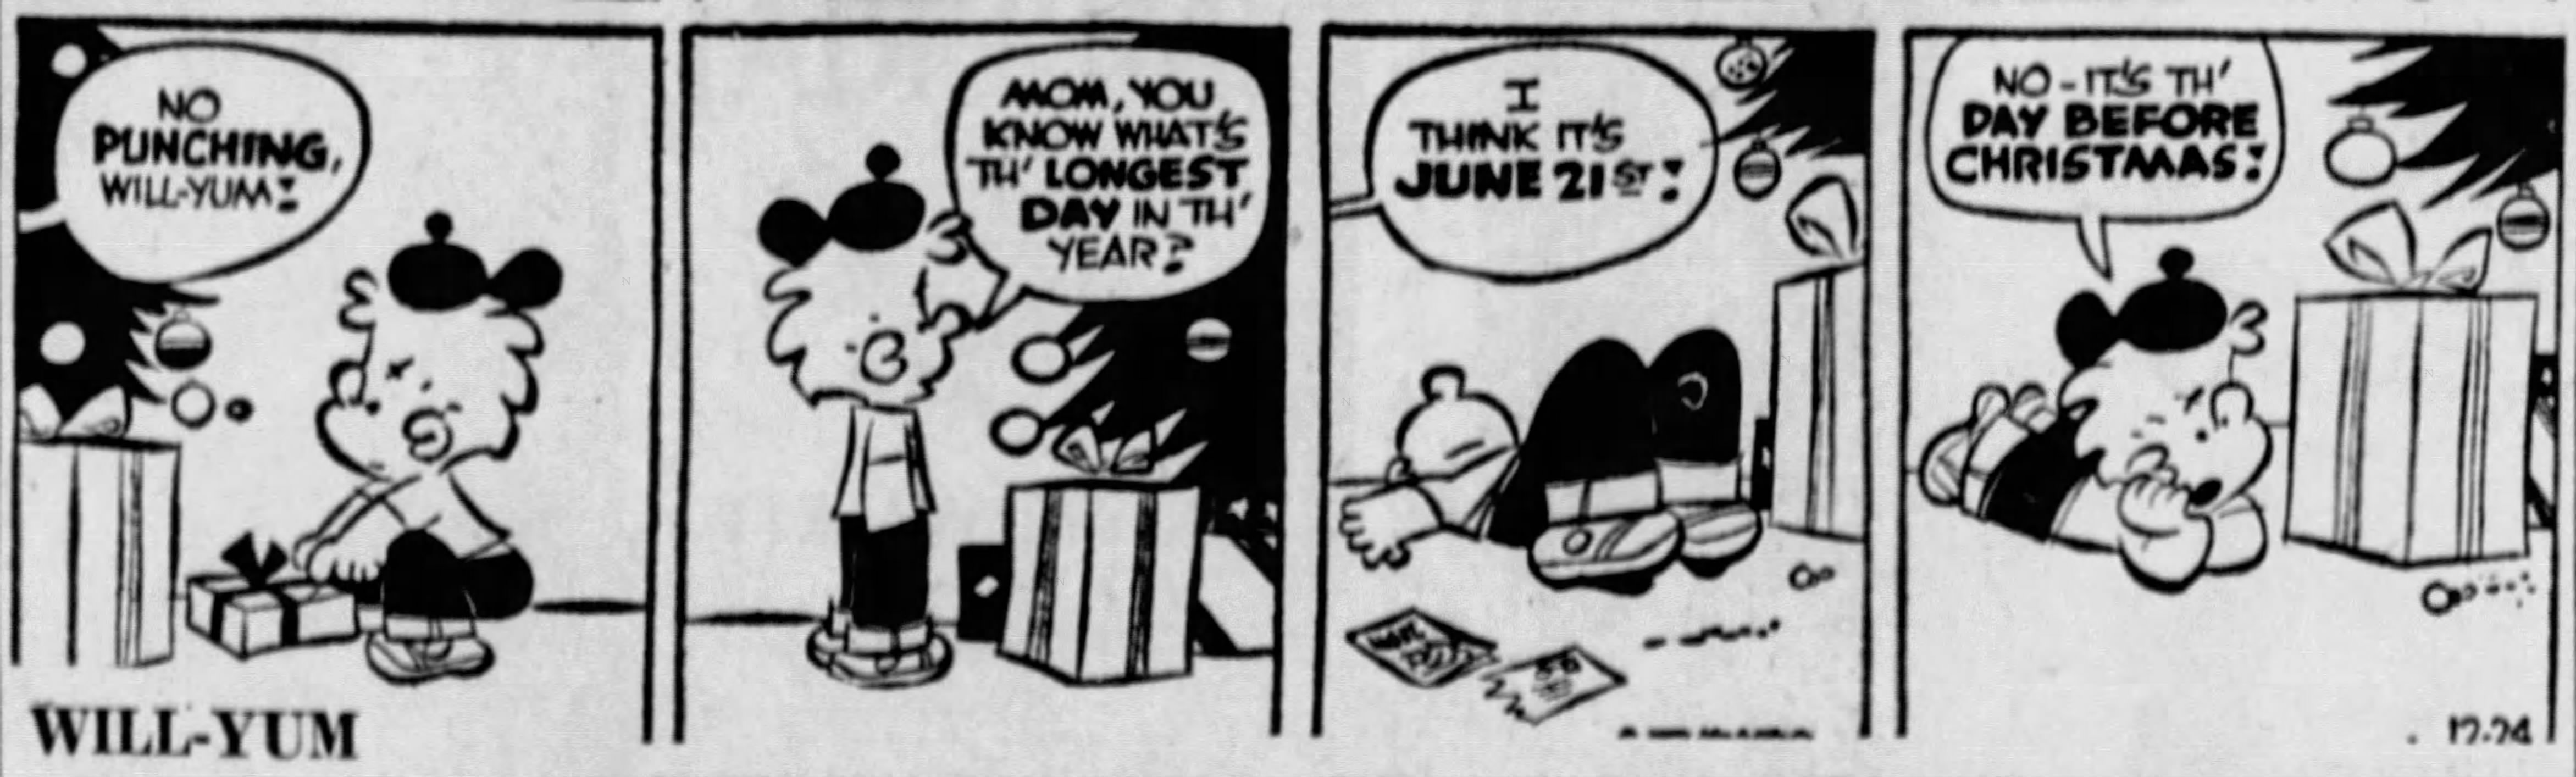 Will-Yum, December 24, 1958